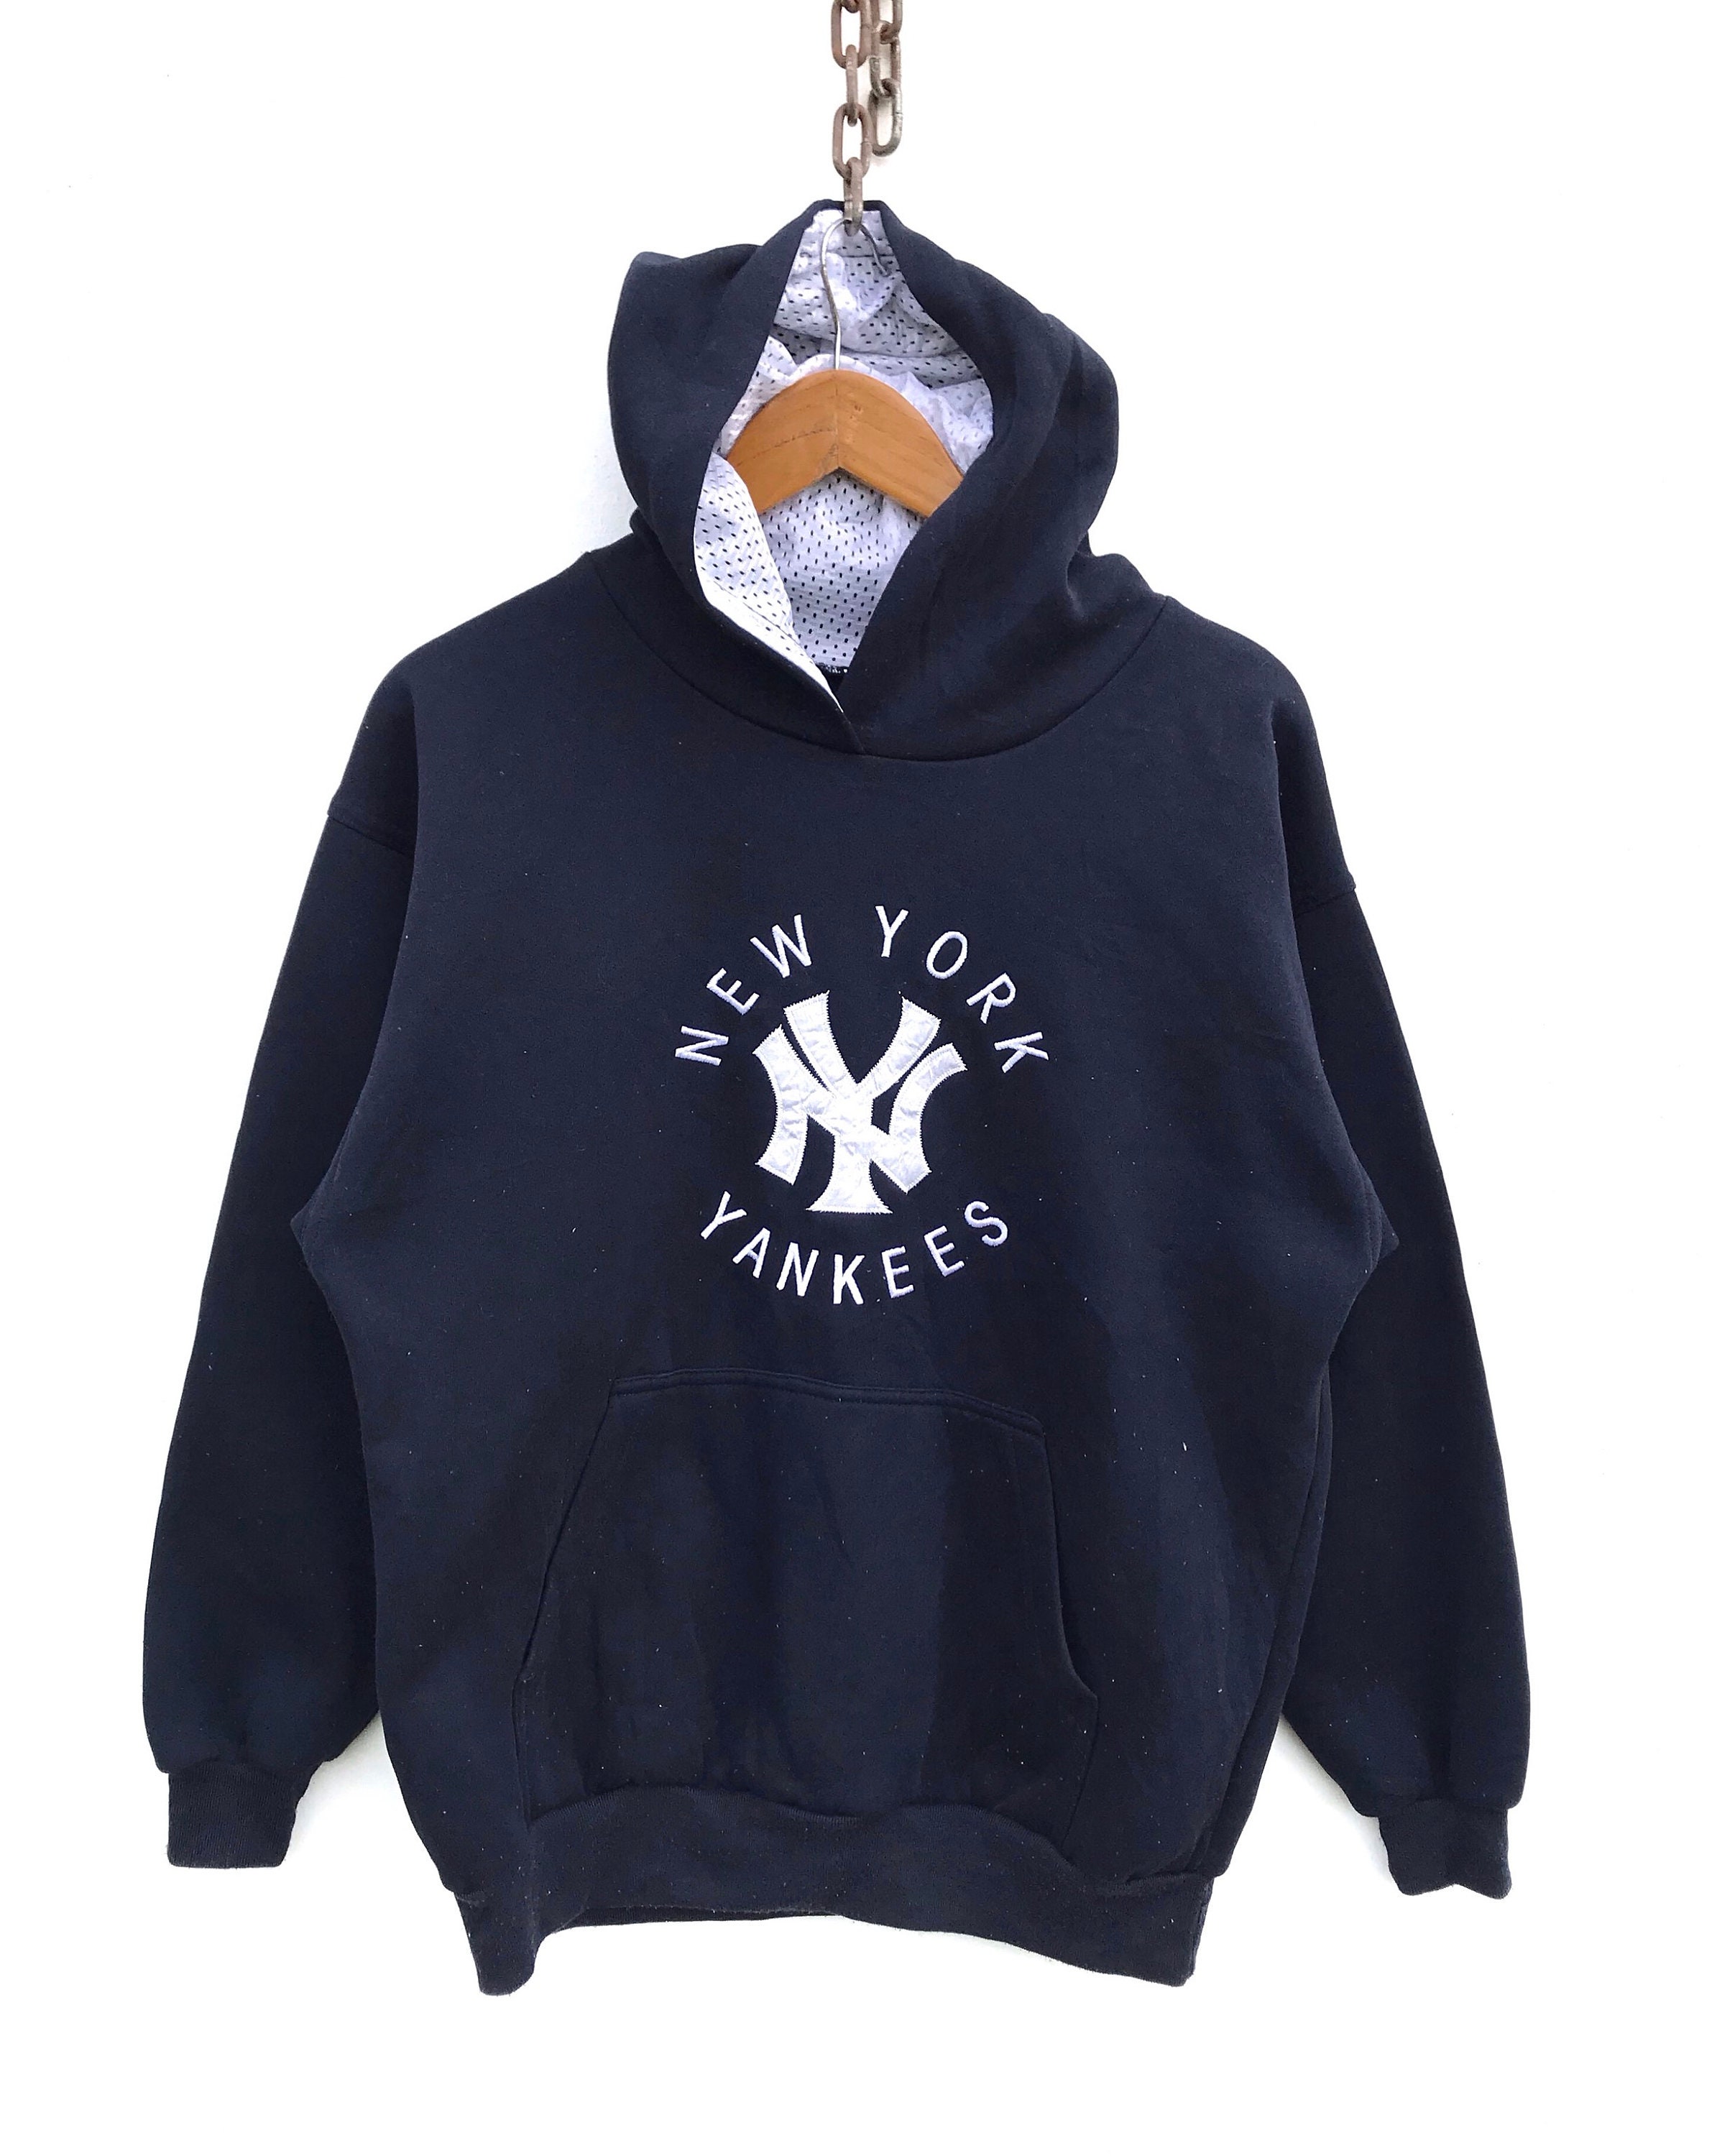 Outerwear - New York Yankees Throwback Apparel & Jerseys